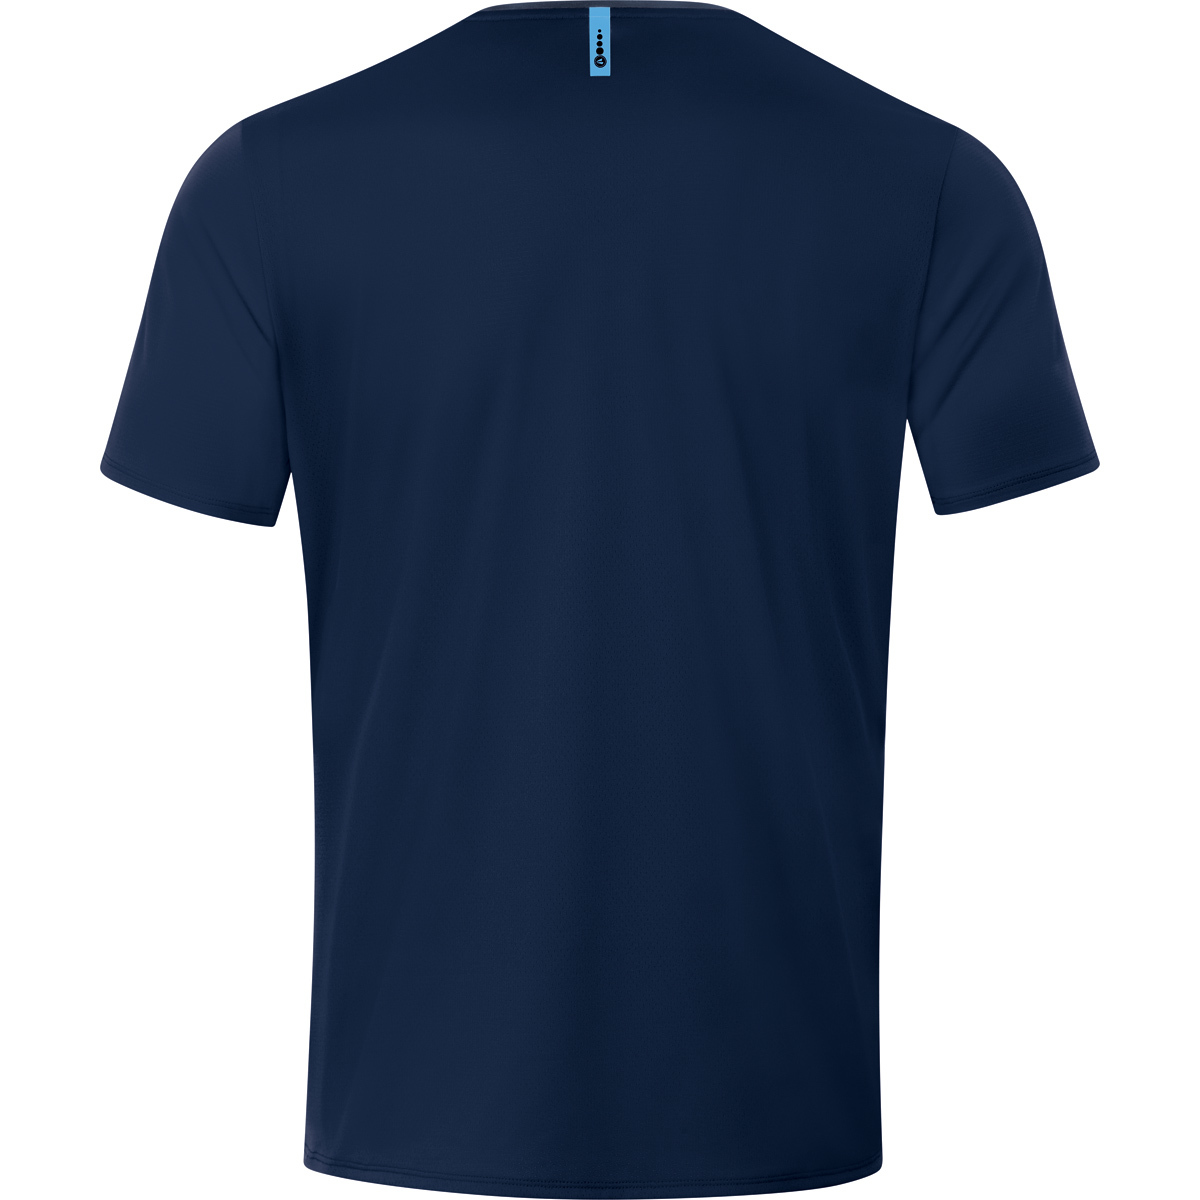 JAKO T-Shirt Champ 2.0 marine/darkblue/skyblue, 6120 L, Herren, Gr